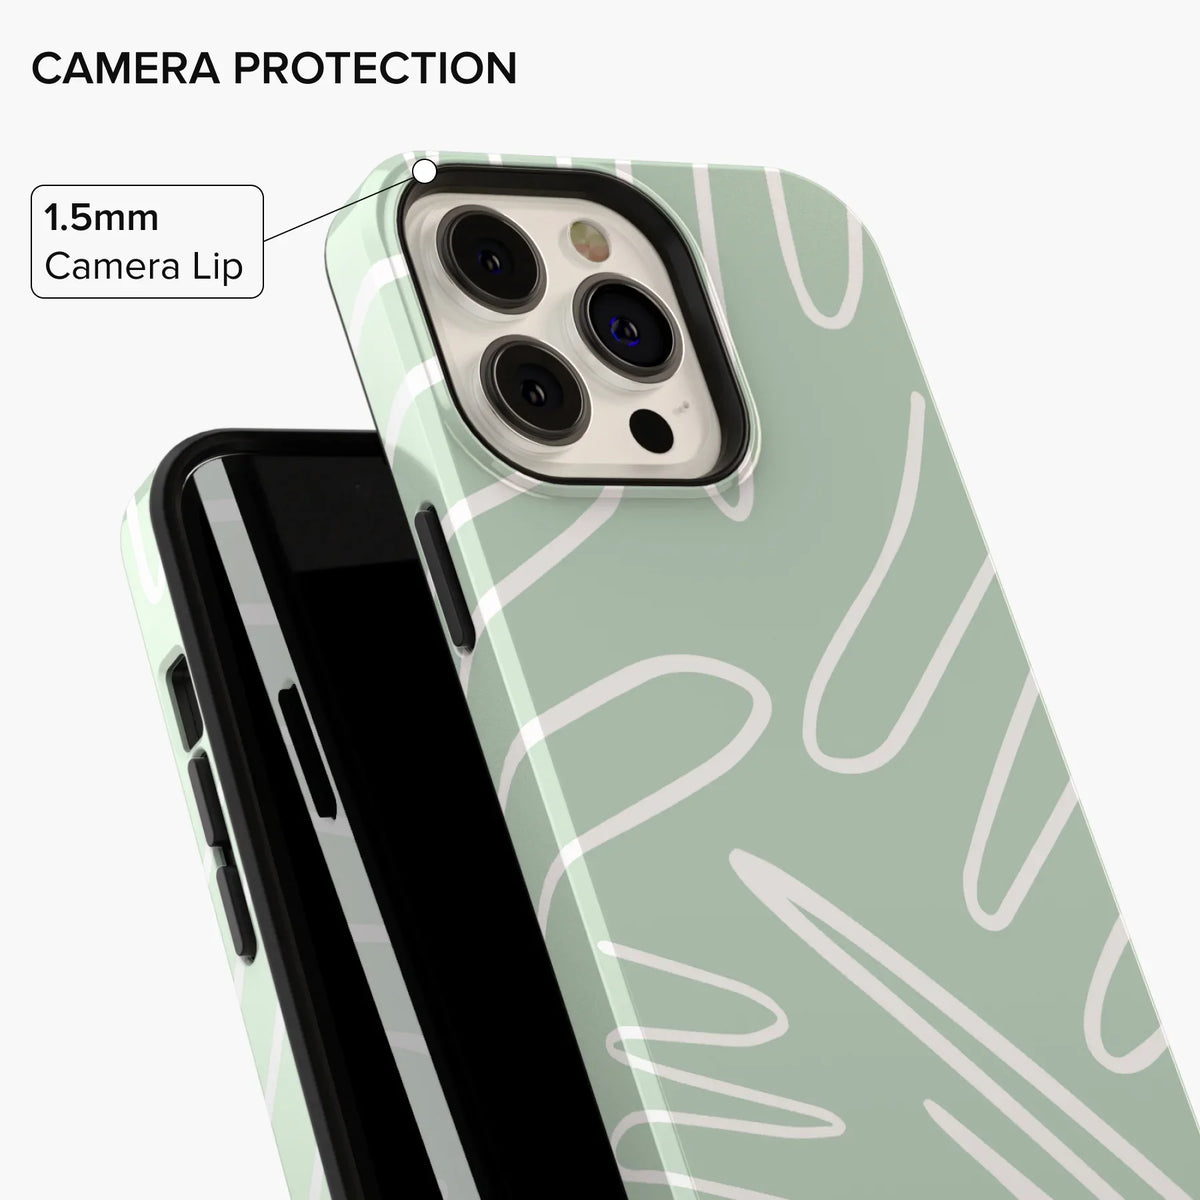 Green Rhythm iPhone Case - iPhone 14 Pro